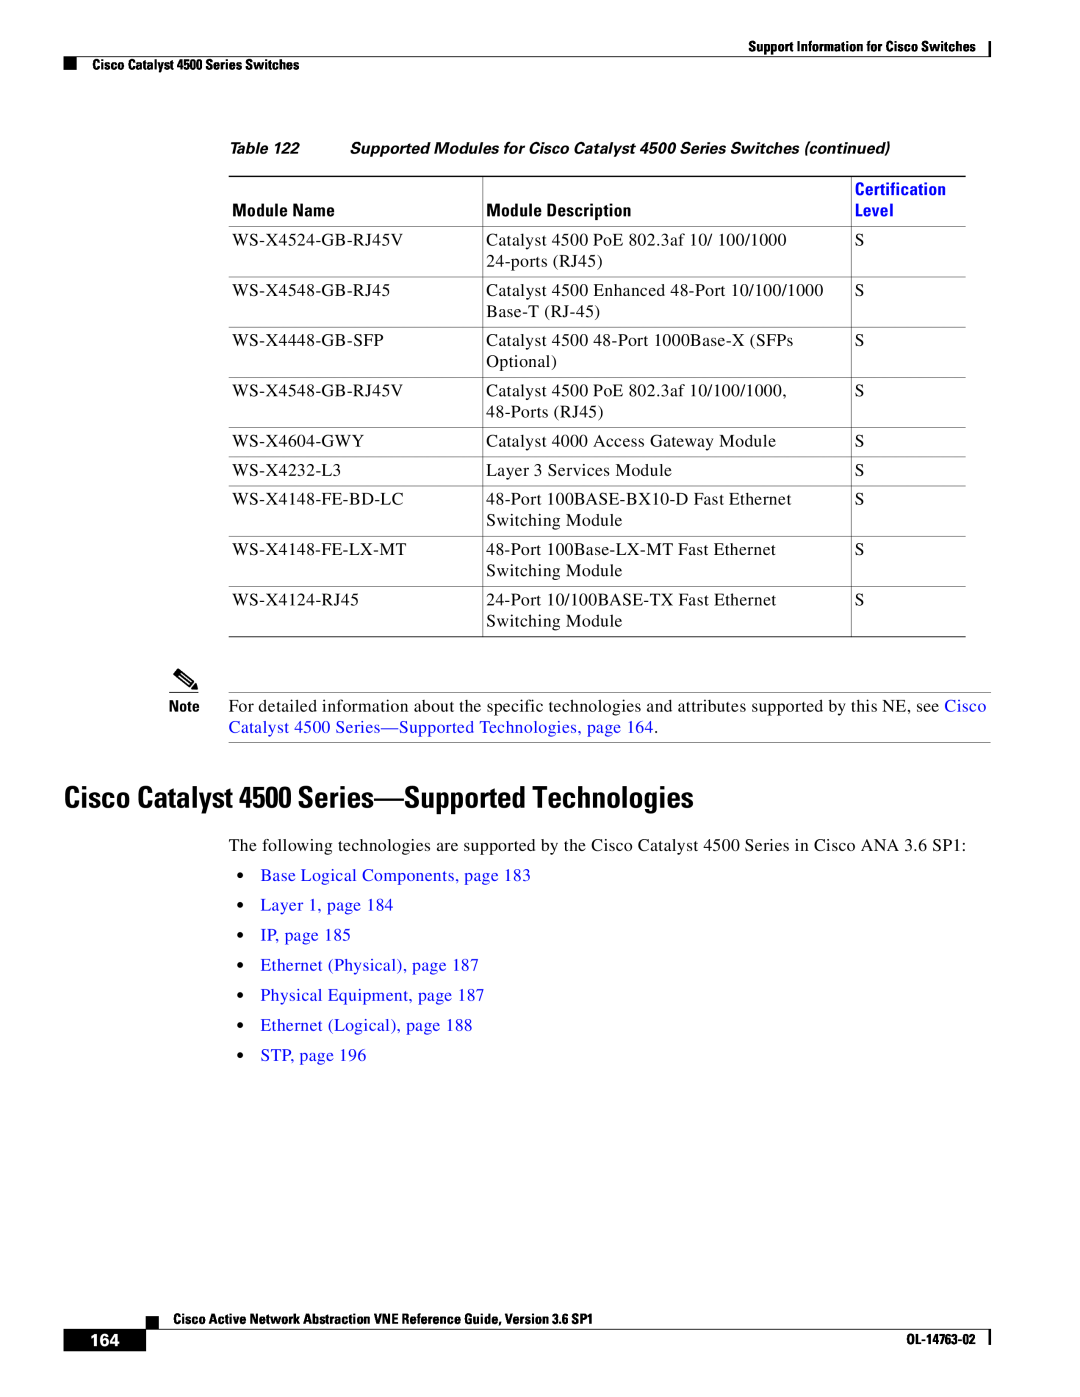 Cisco Systems OL-14763-02 manual Cisco Catalyst 4500 Series-Supported Technologies, Module Name, Module Description 